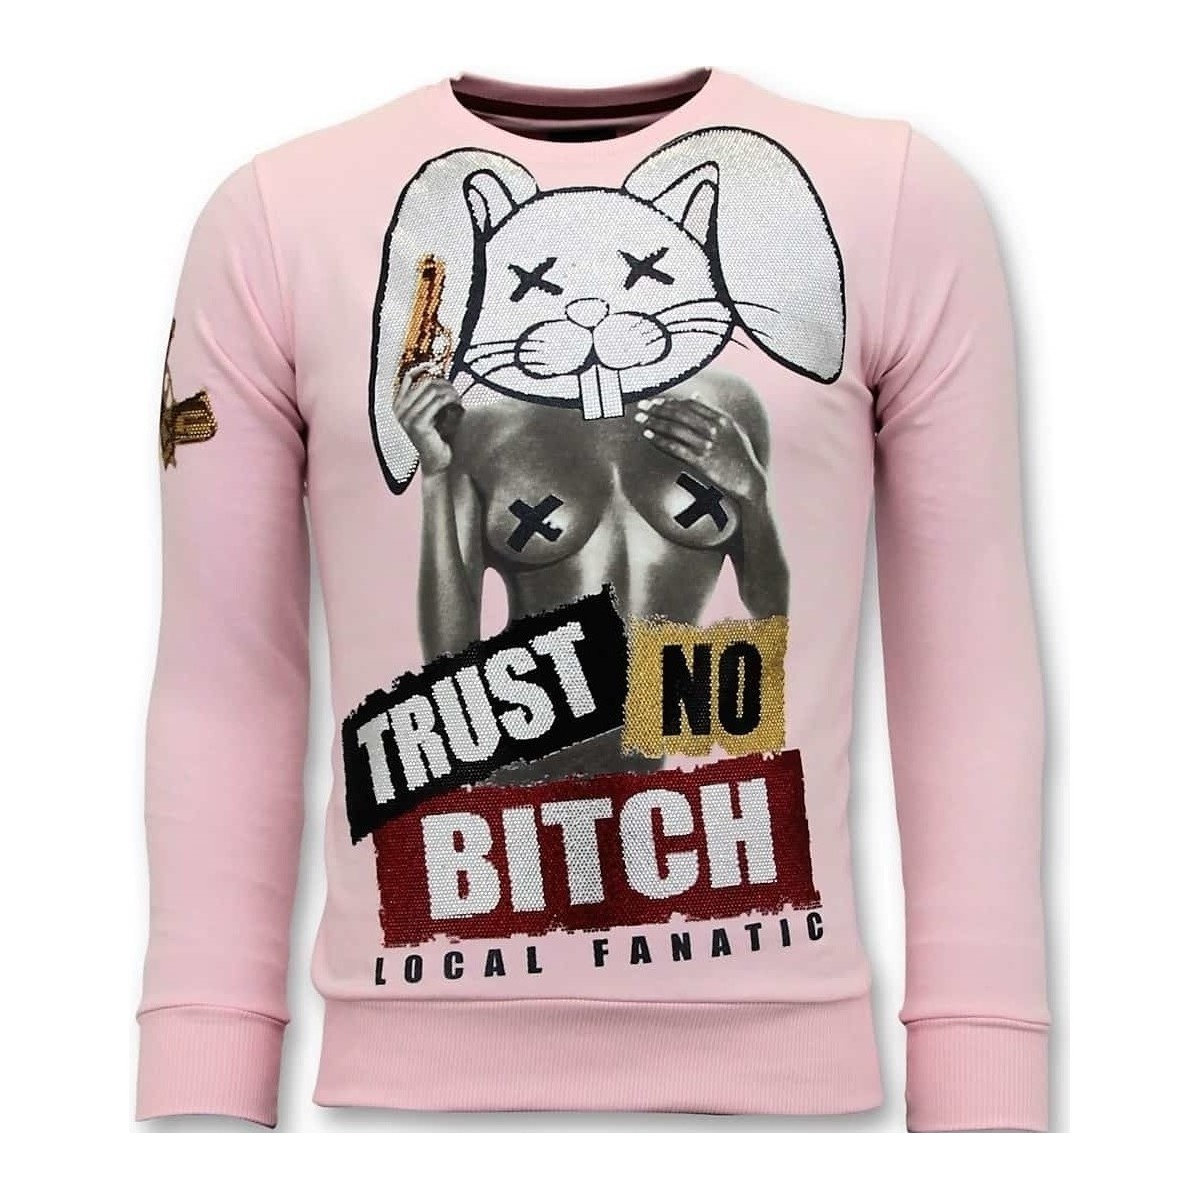 Textiel Heren Sweaters / Sweatshirts Local Fanatic Trust No Bitch Roze